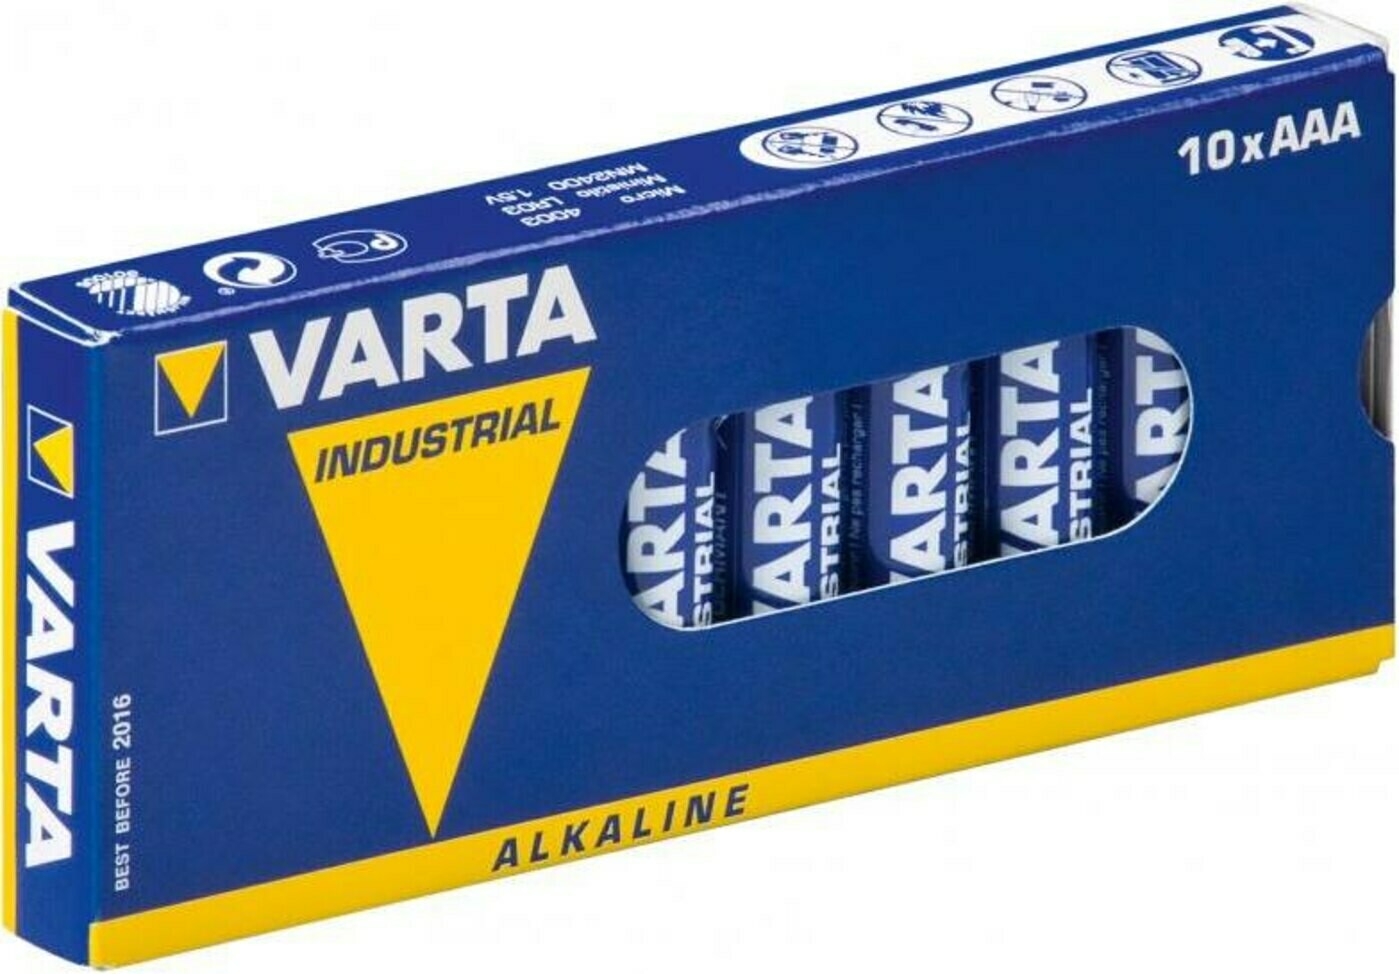 VARTA Industrial AAA - 10 Stk.